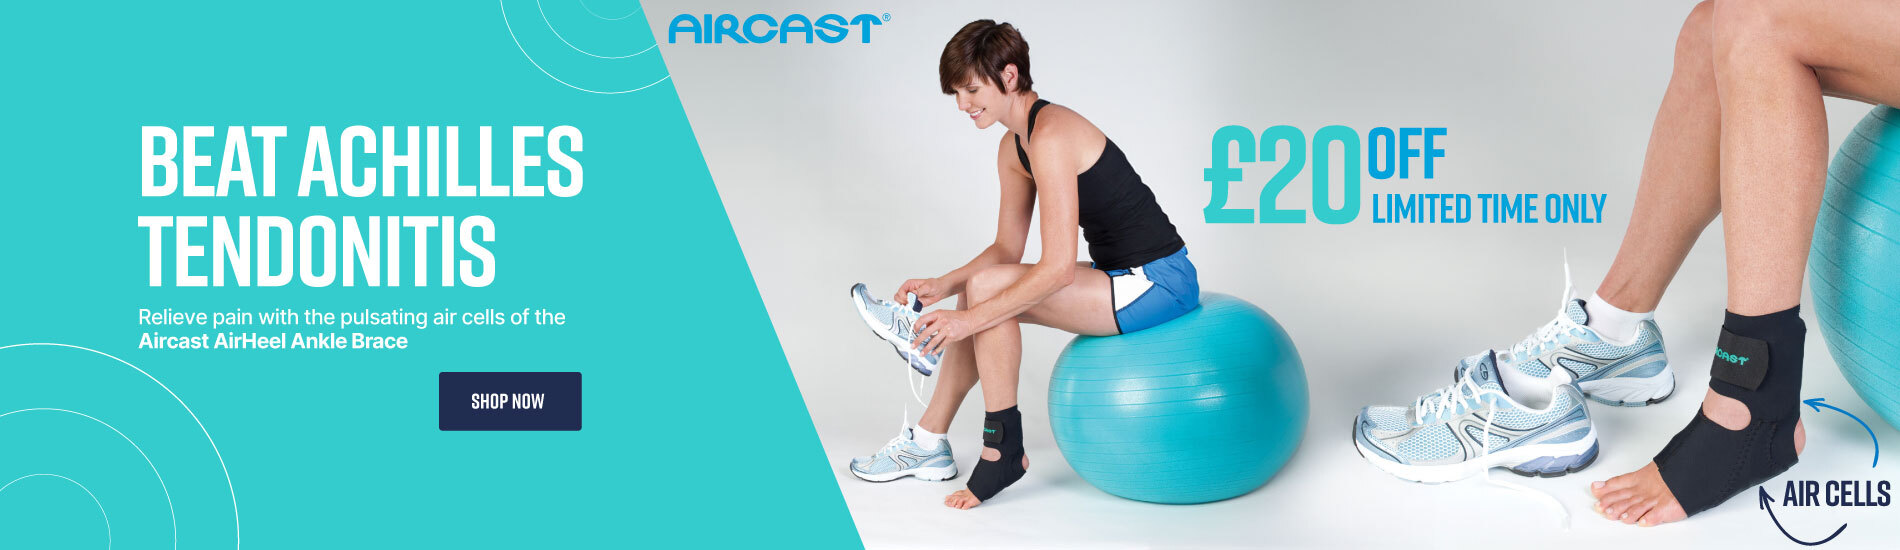 Aircast AirHeel Ankle Brace